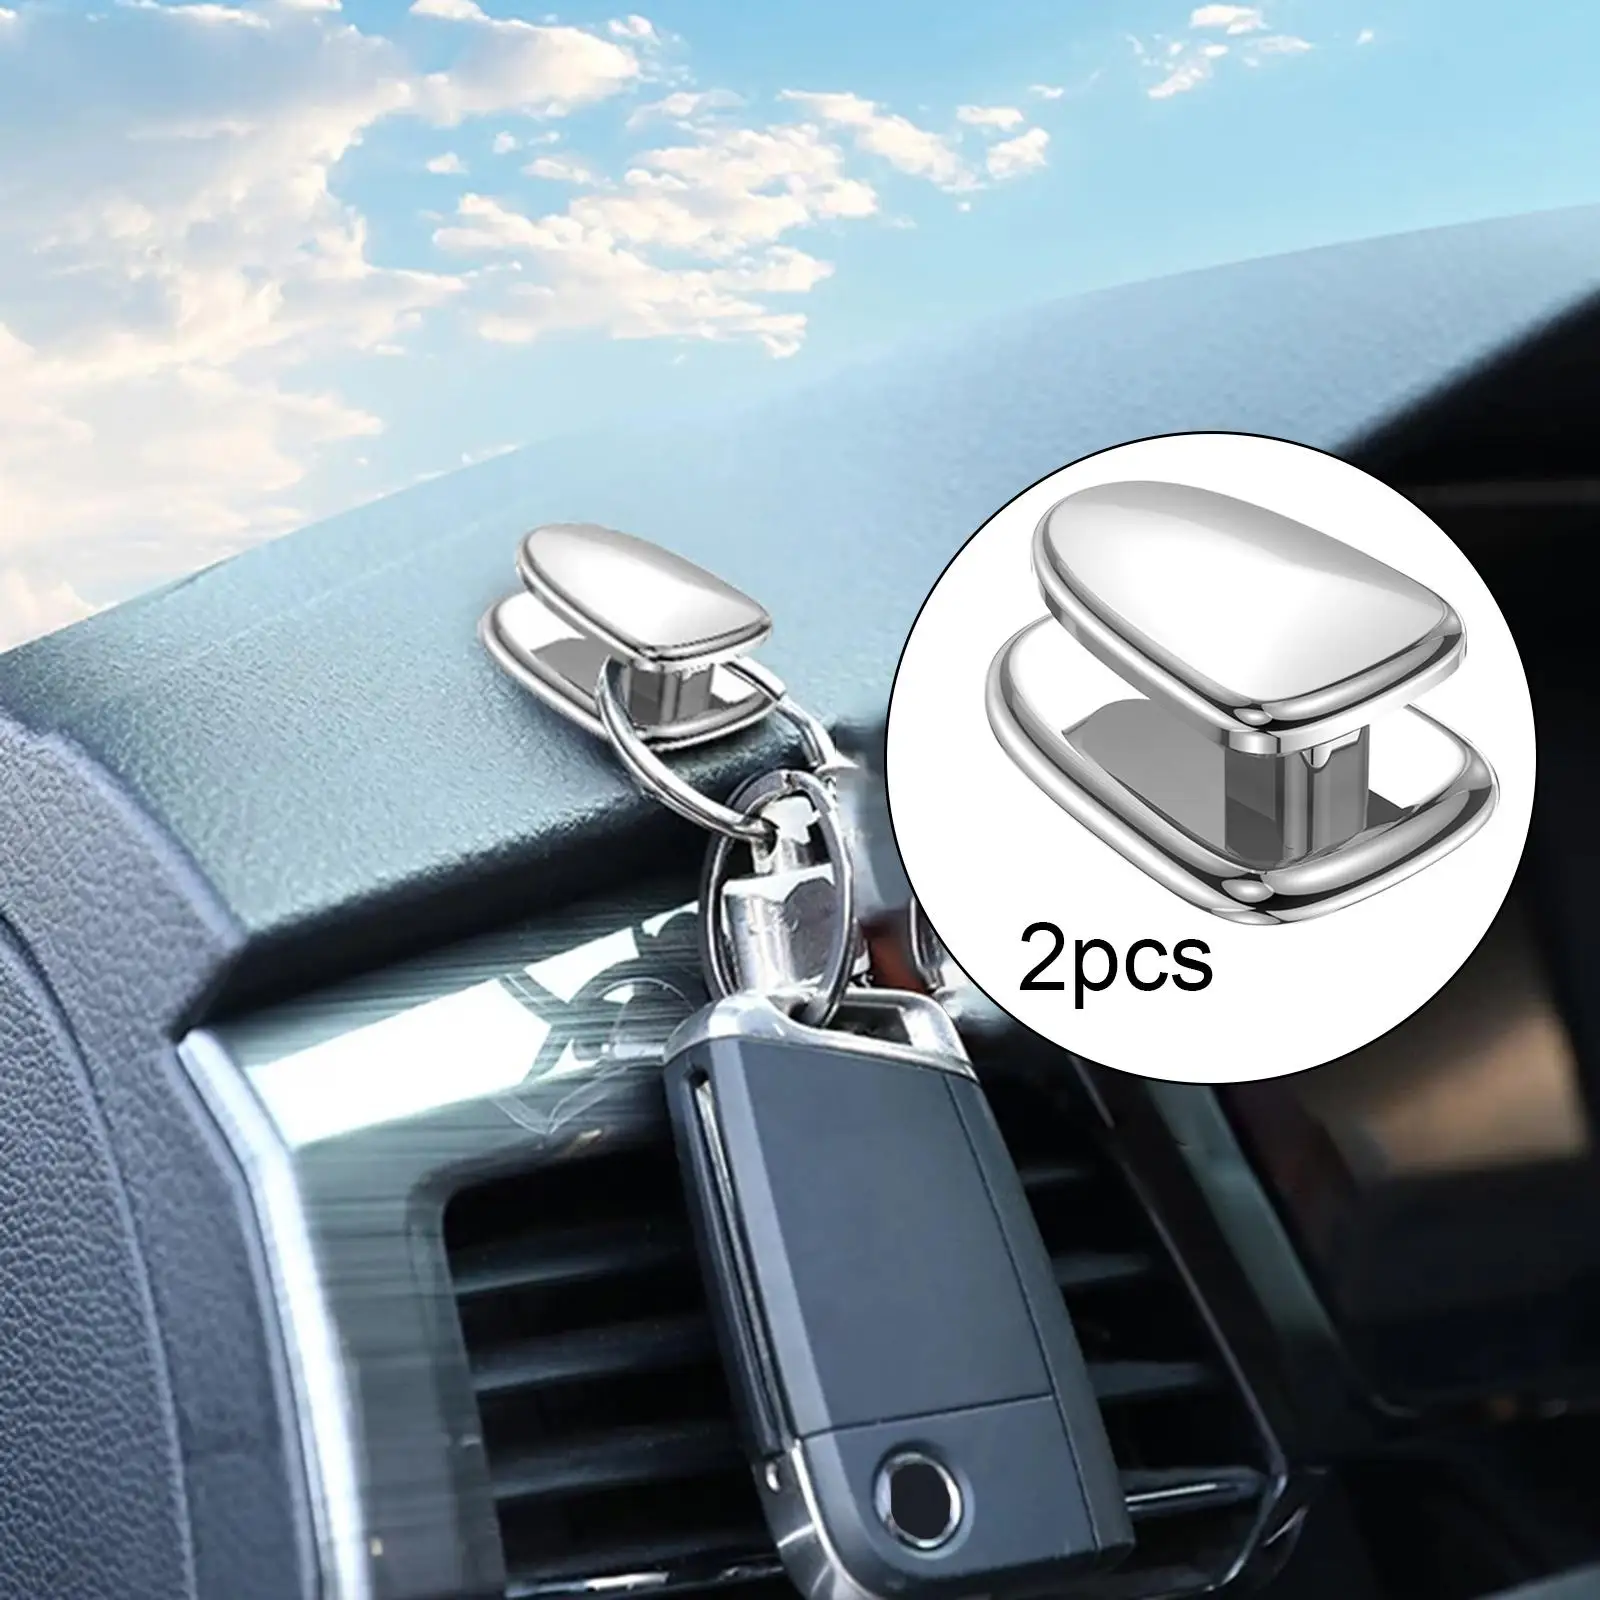 2Pcs Car Hooks Accs Multifunctional Mini Hook Fastener Clip Wall Hook for Car